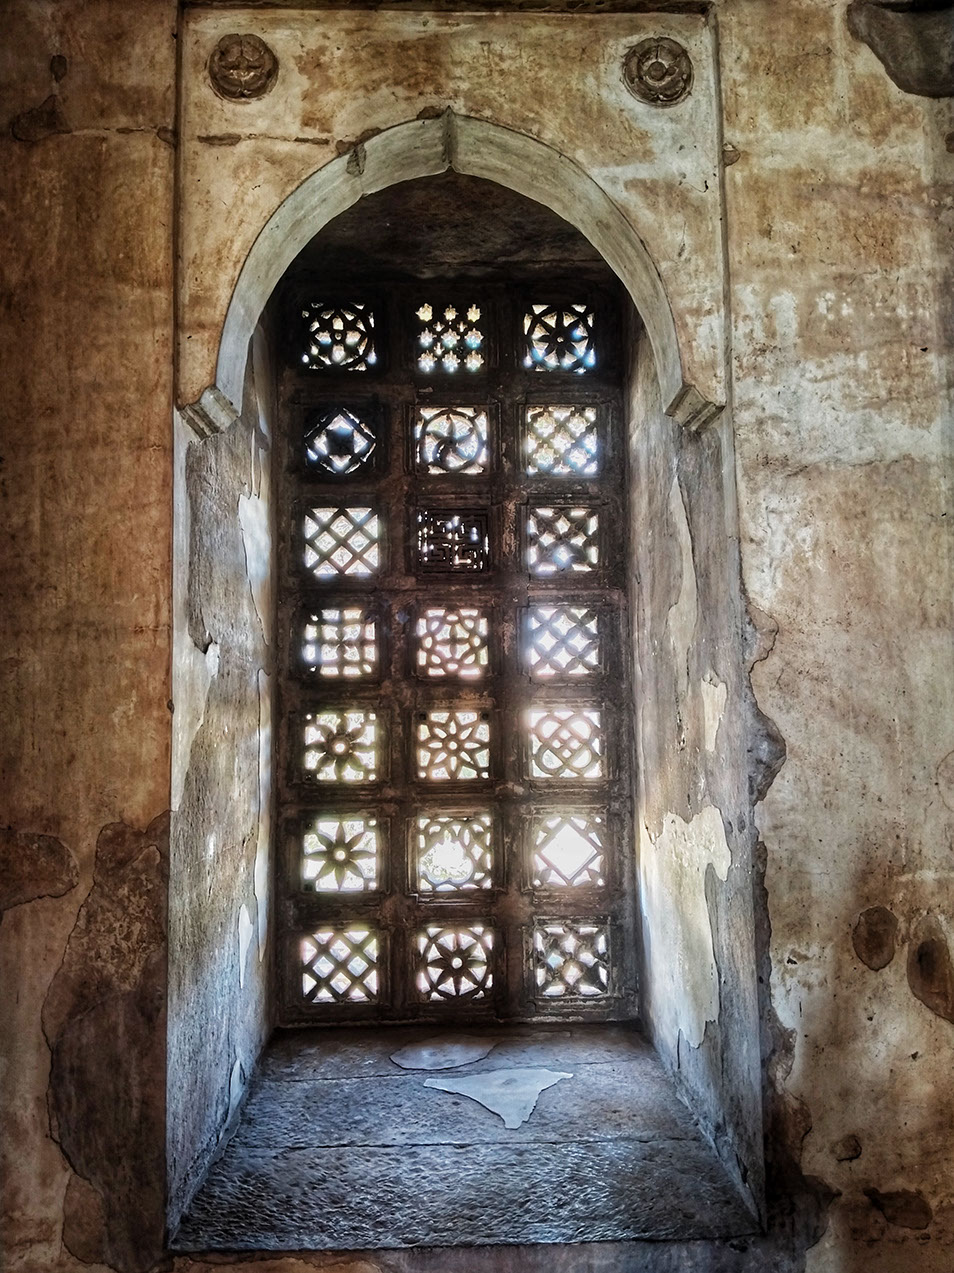 A window in Jami Masjid has geometric patterns carved into its jhali